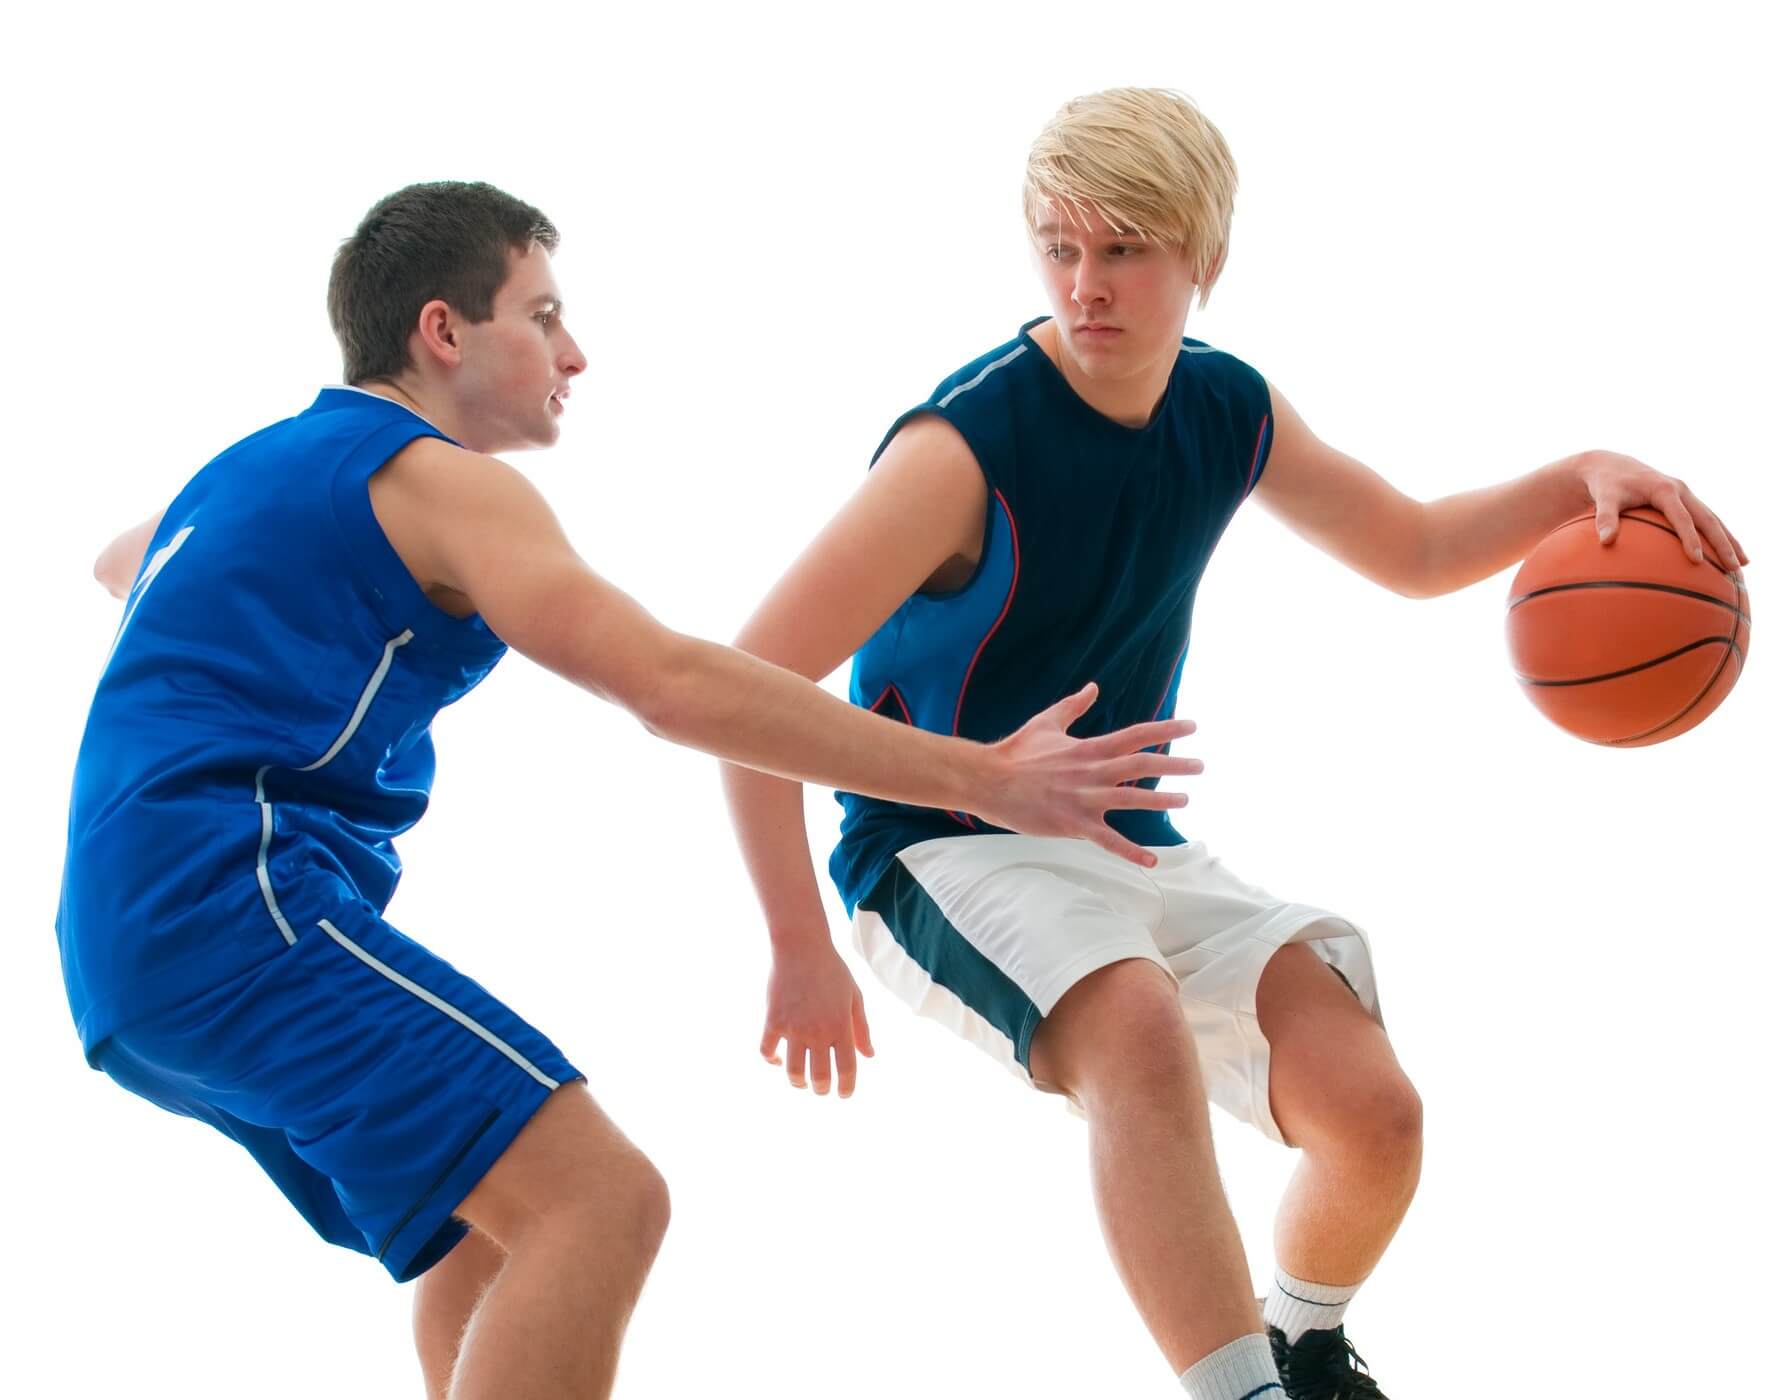 Injury Prevention: Basketball